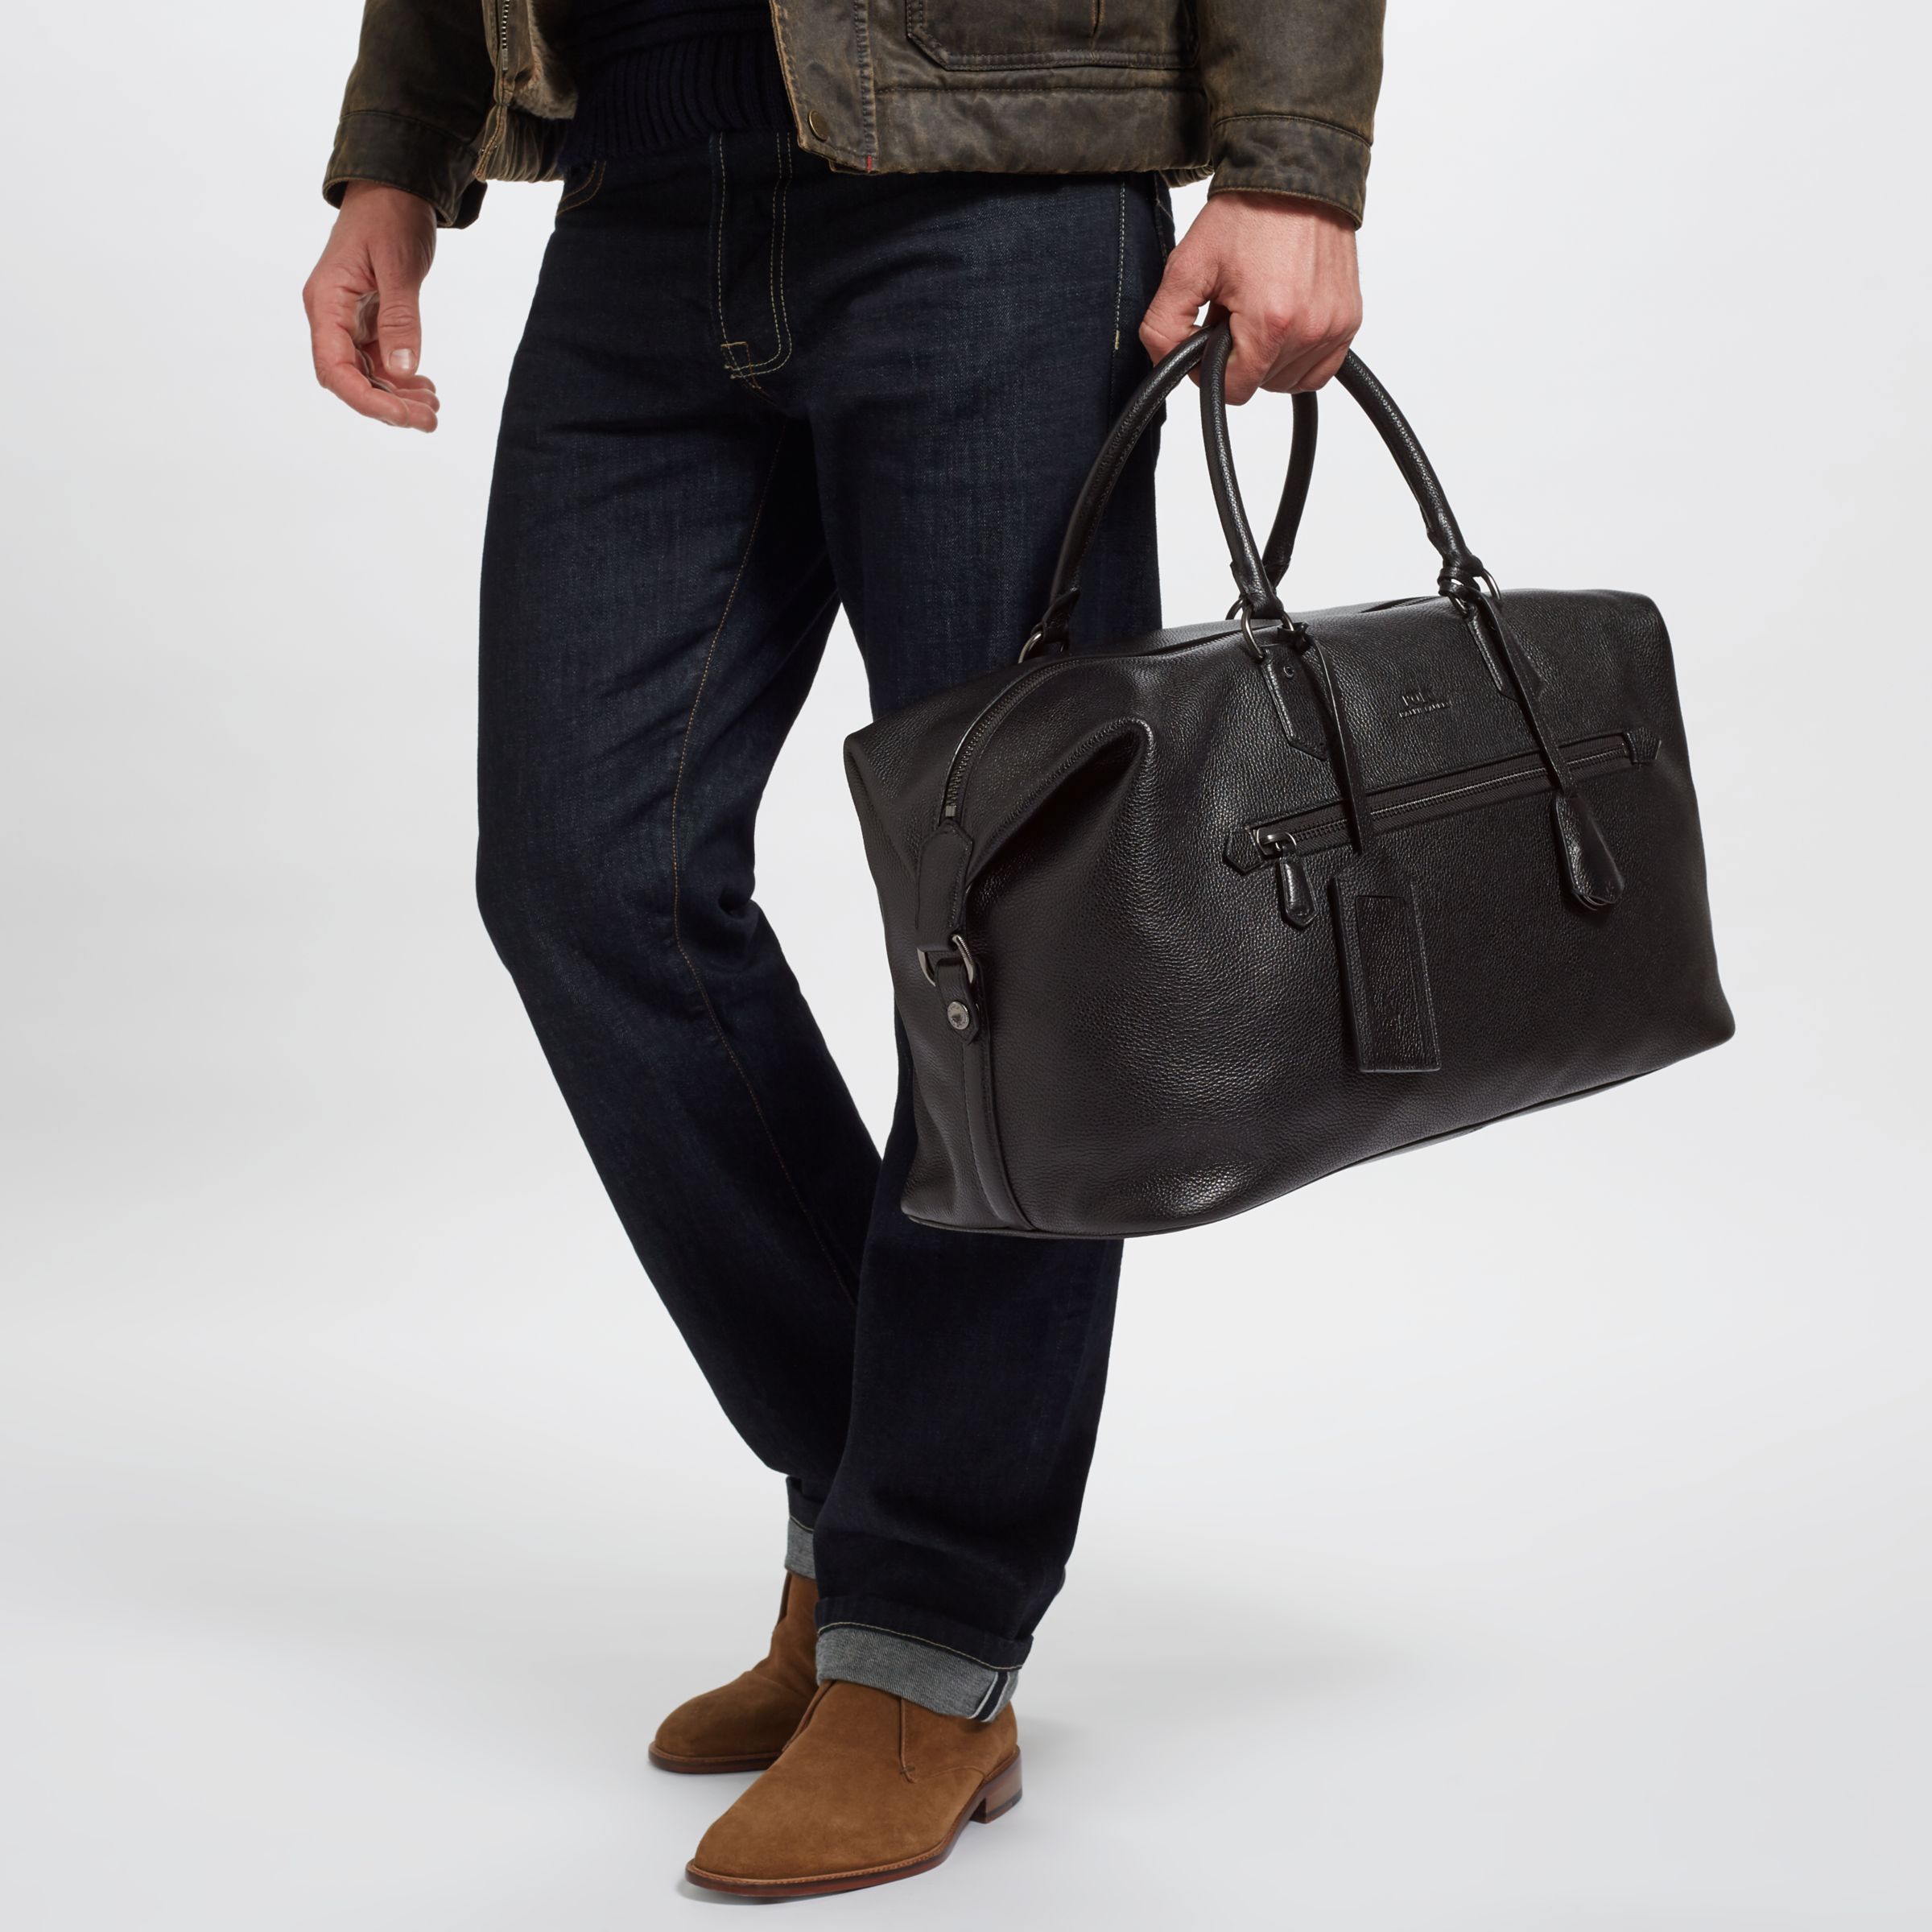 Polo Ralph Lauren Pebble Leather Duffle Bag, Black